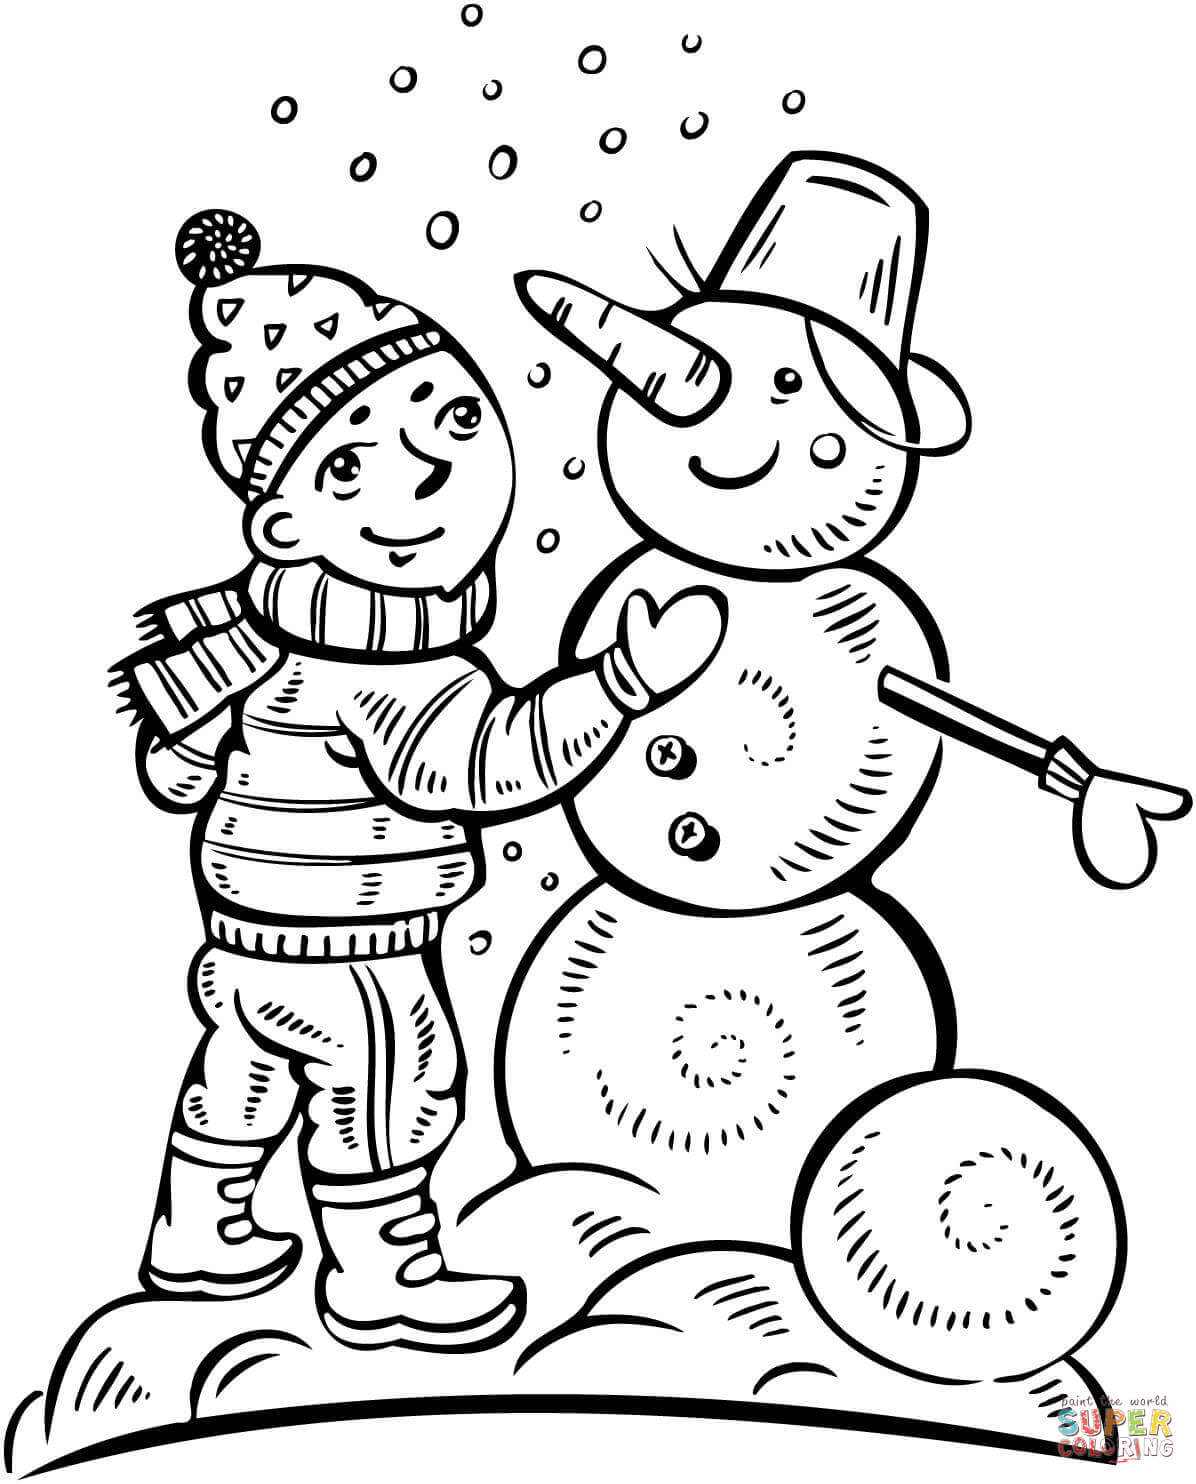 Building Snowman Coloring Pages